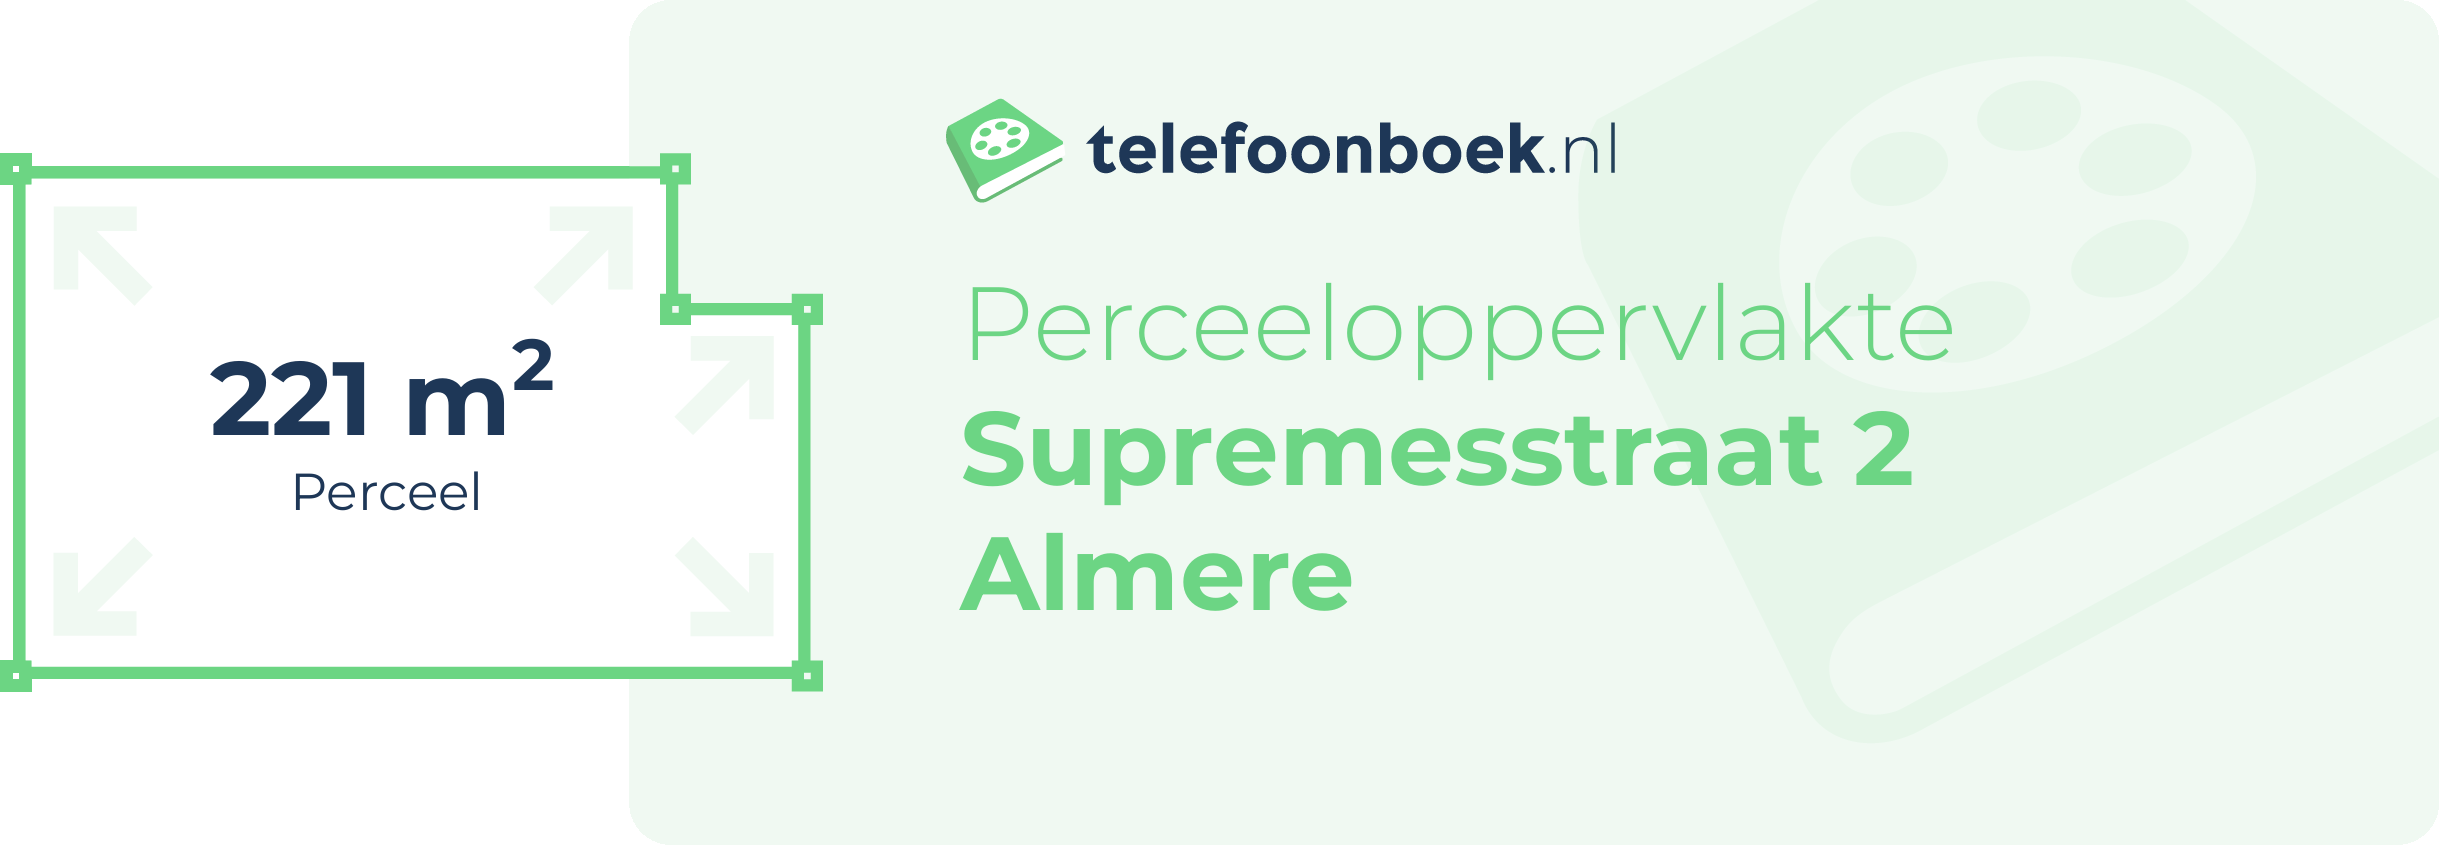 Perceeloppervlakte Supremesstraat 2 Almere